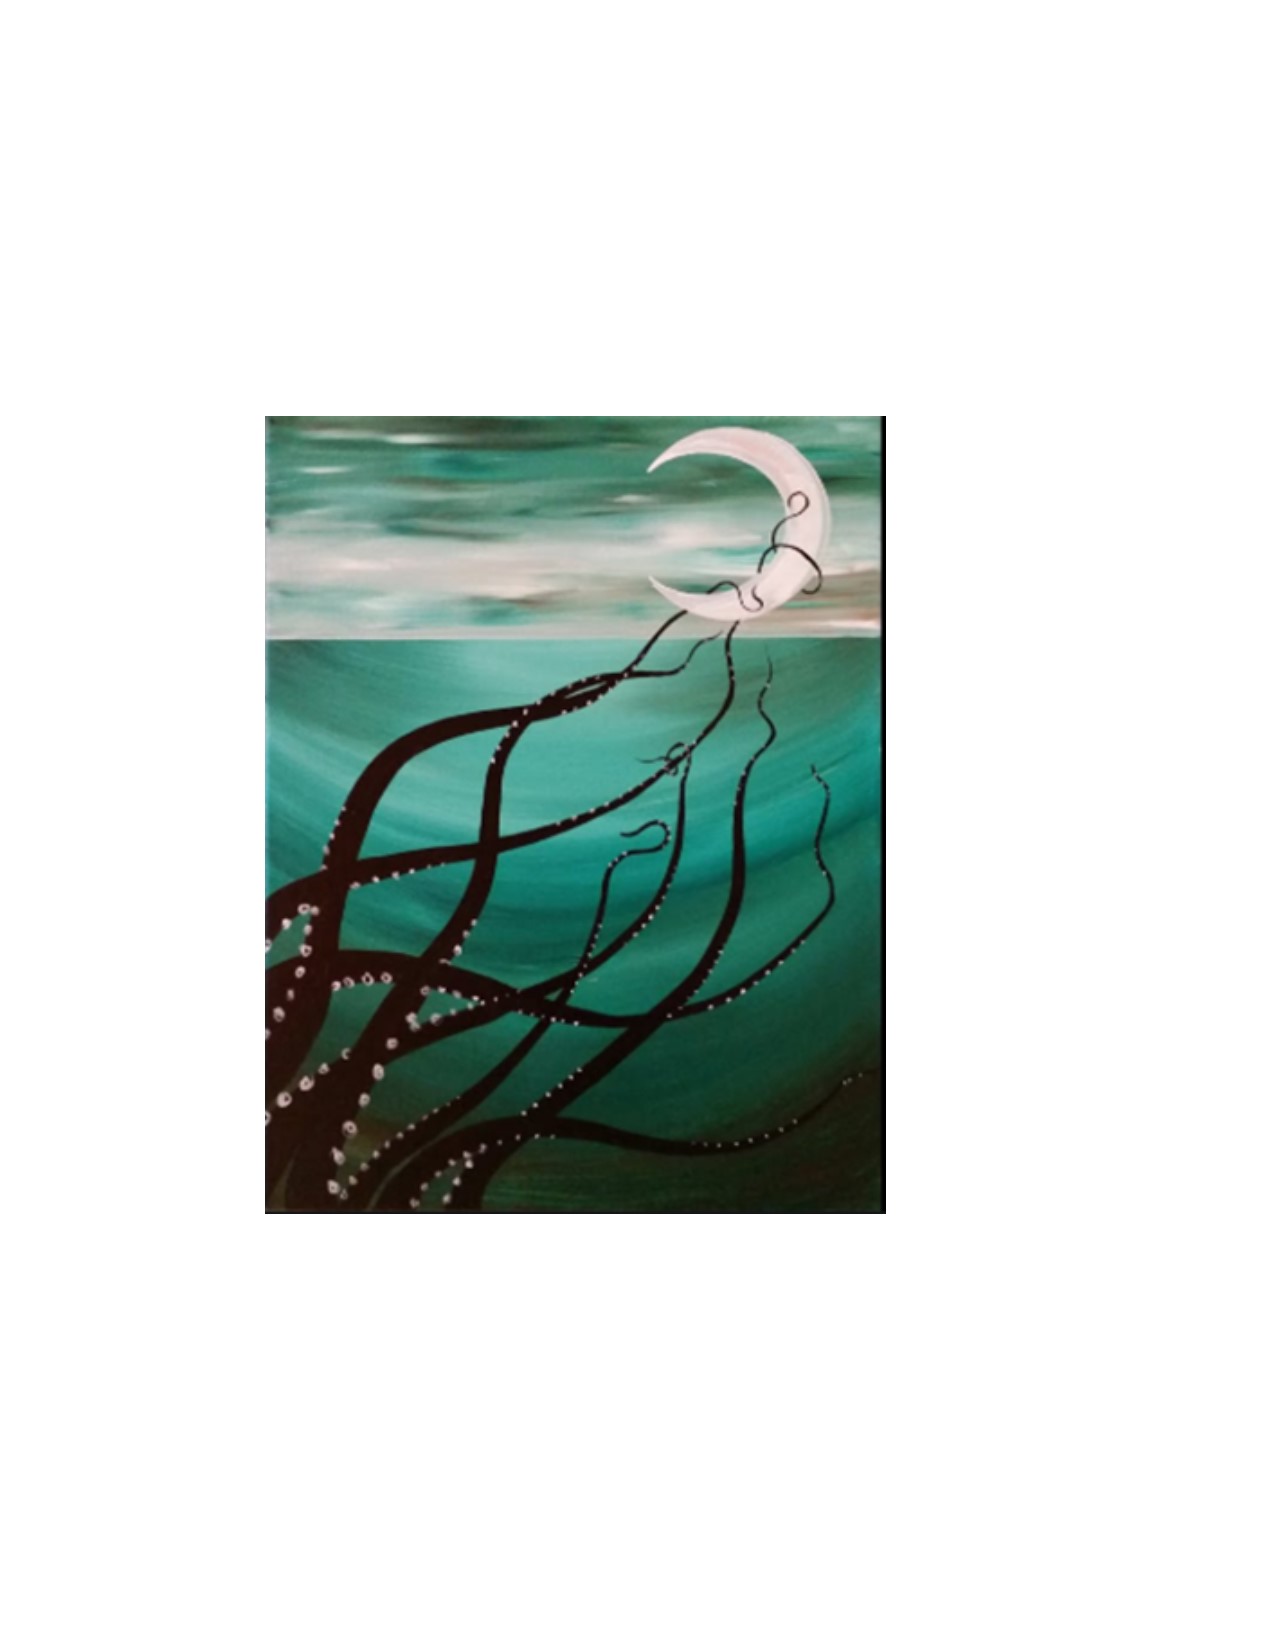 Mocktail painting: Kraken